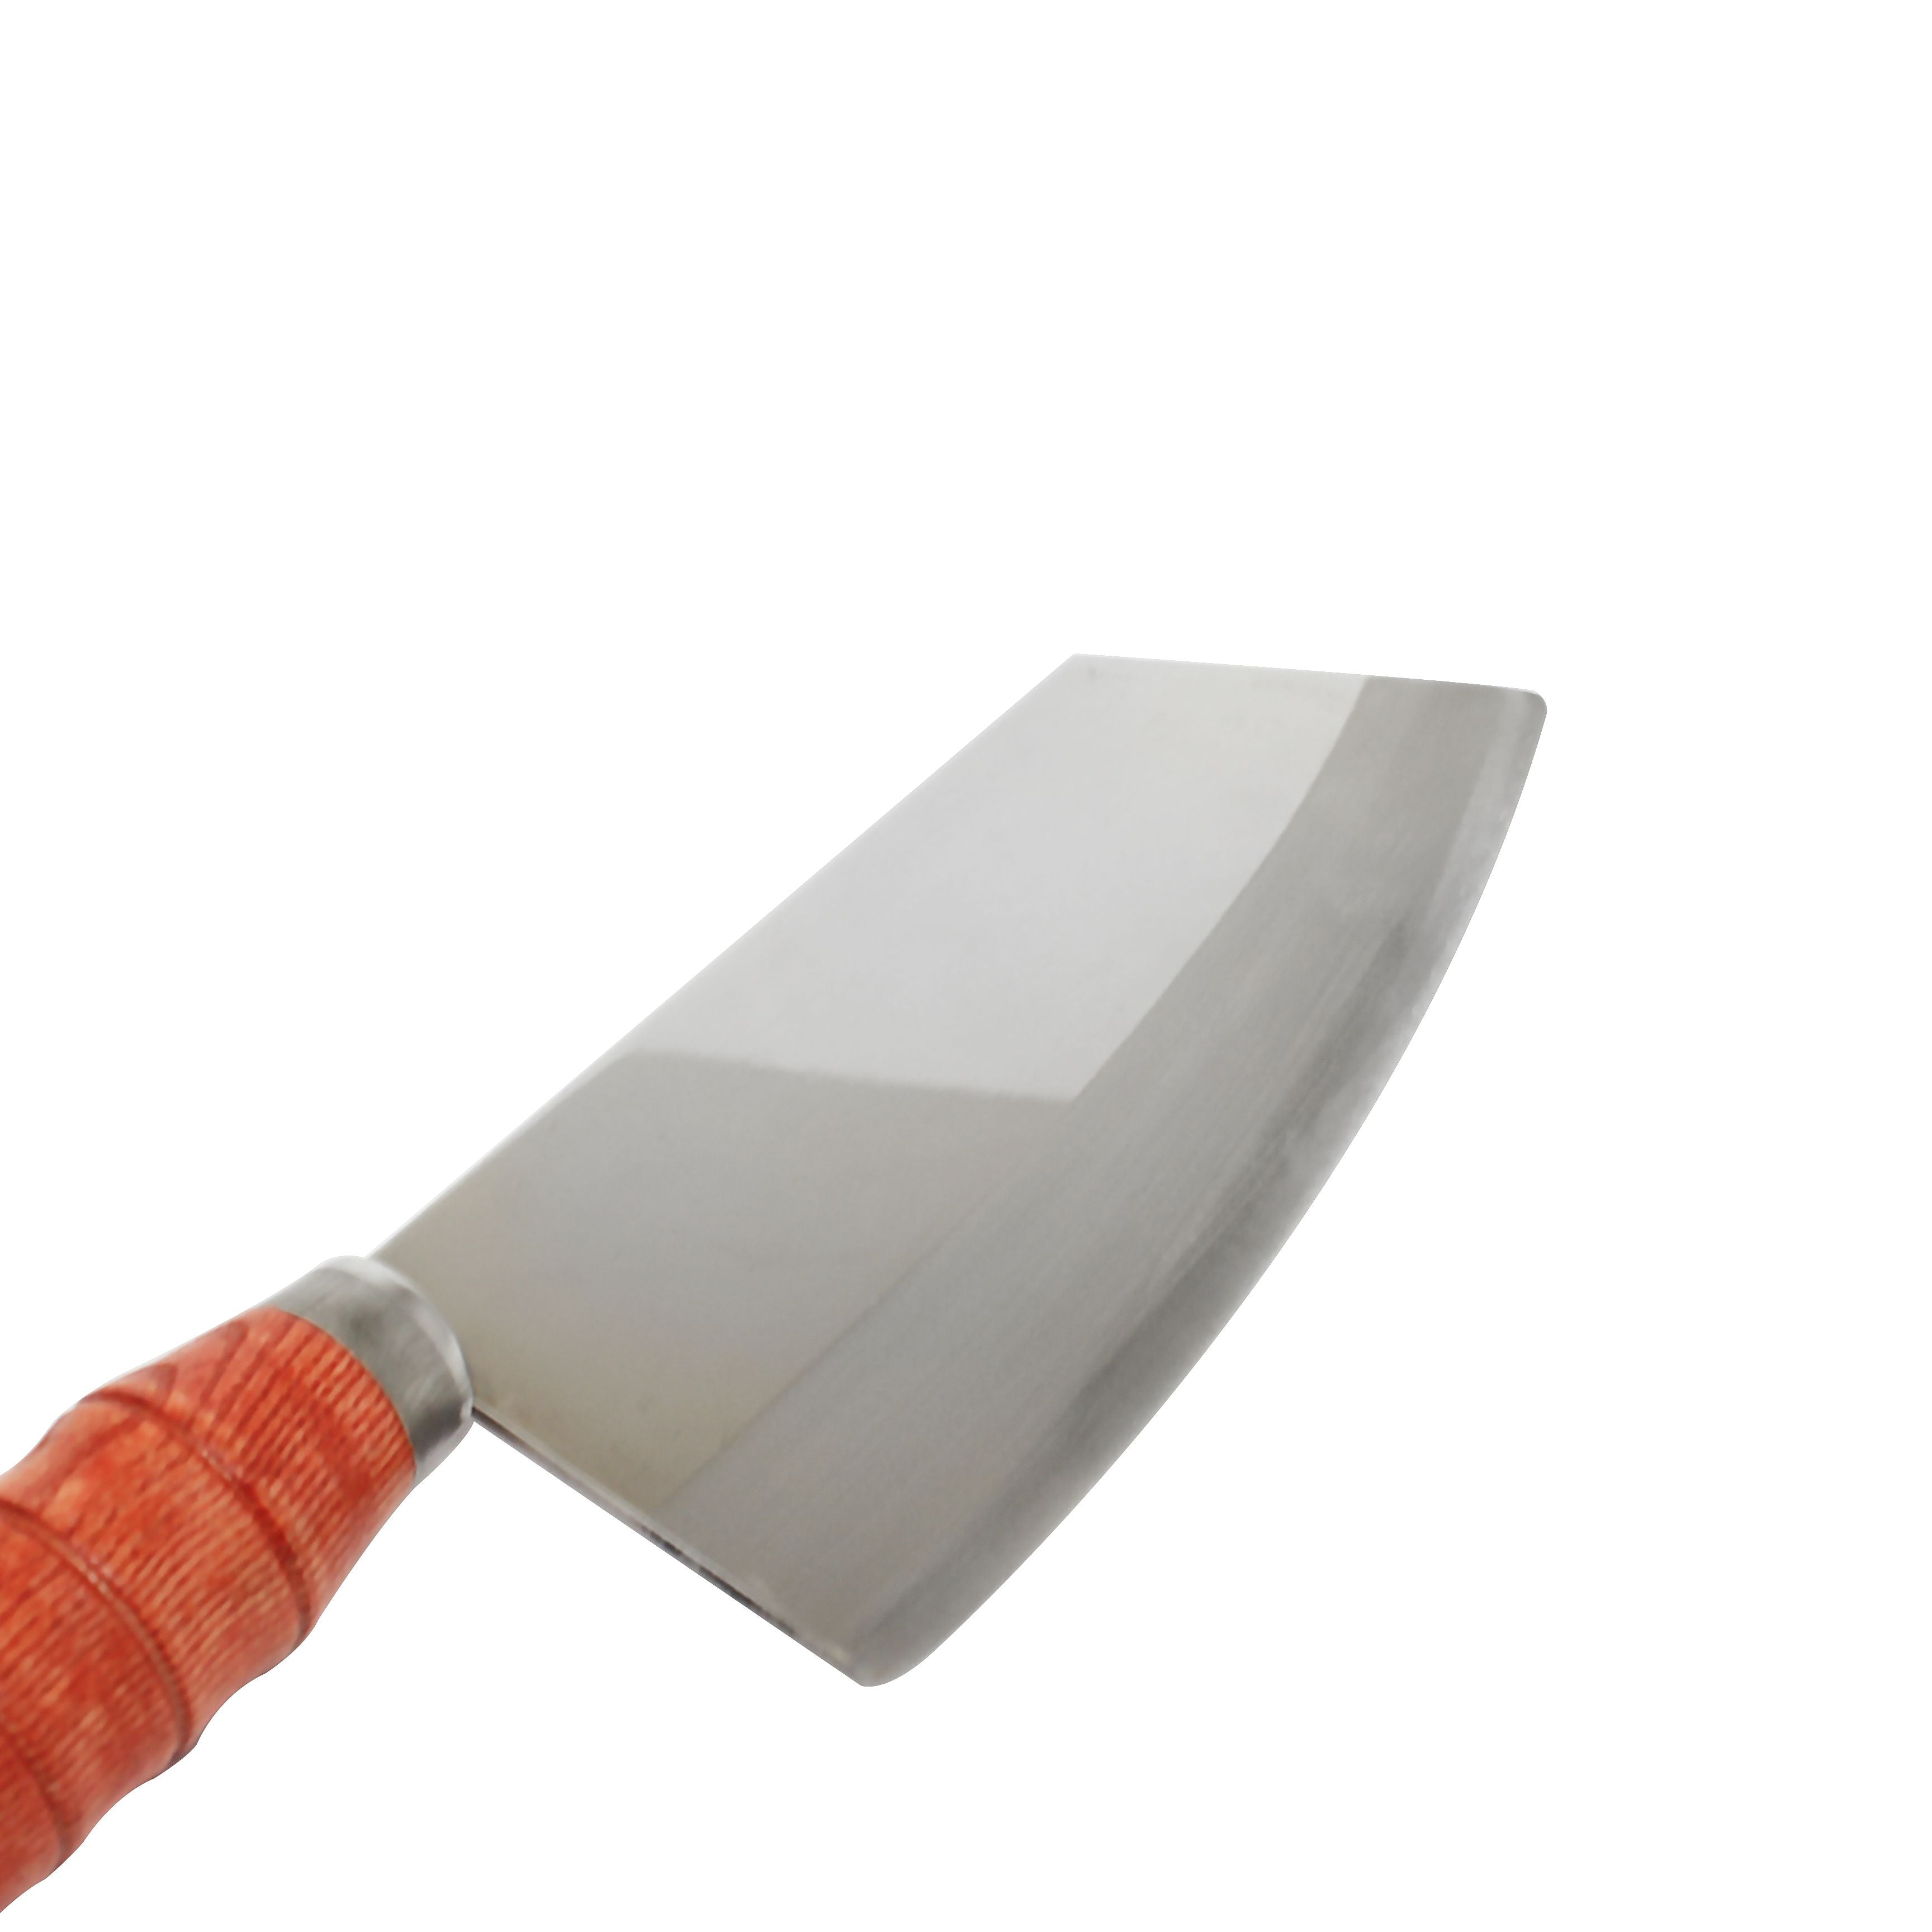 Thunder Group SLKF002 Stainless Steel Kimli Knife with Wooden Handle